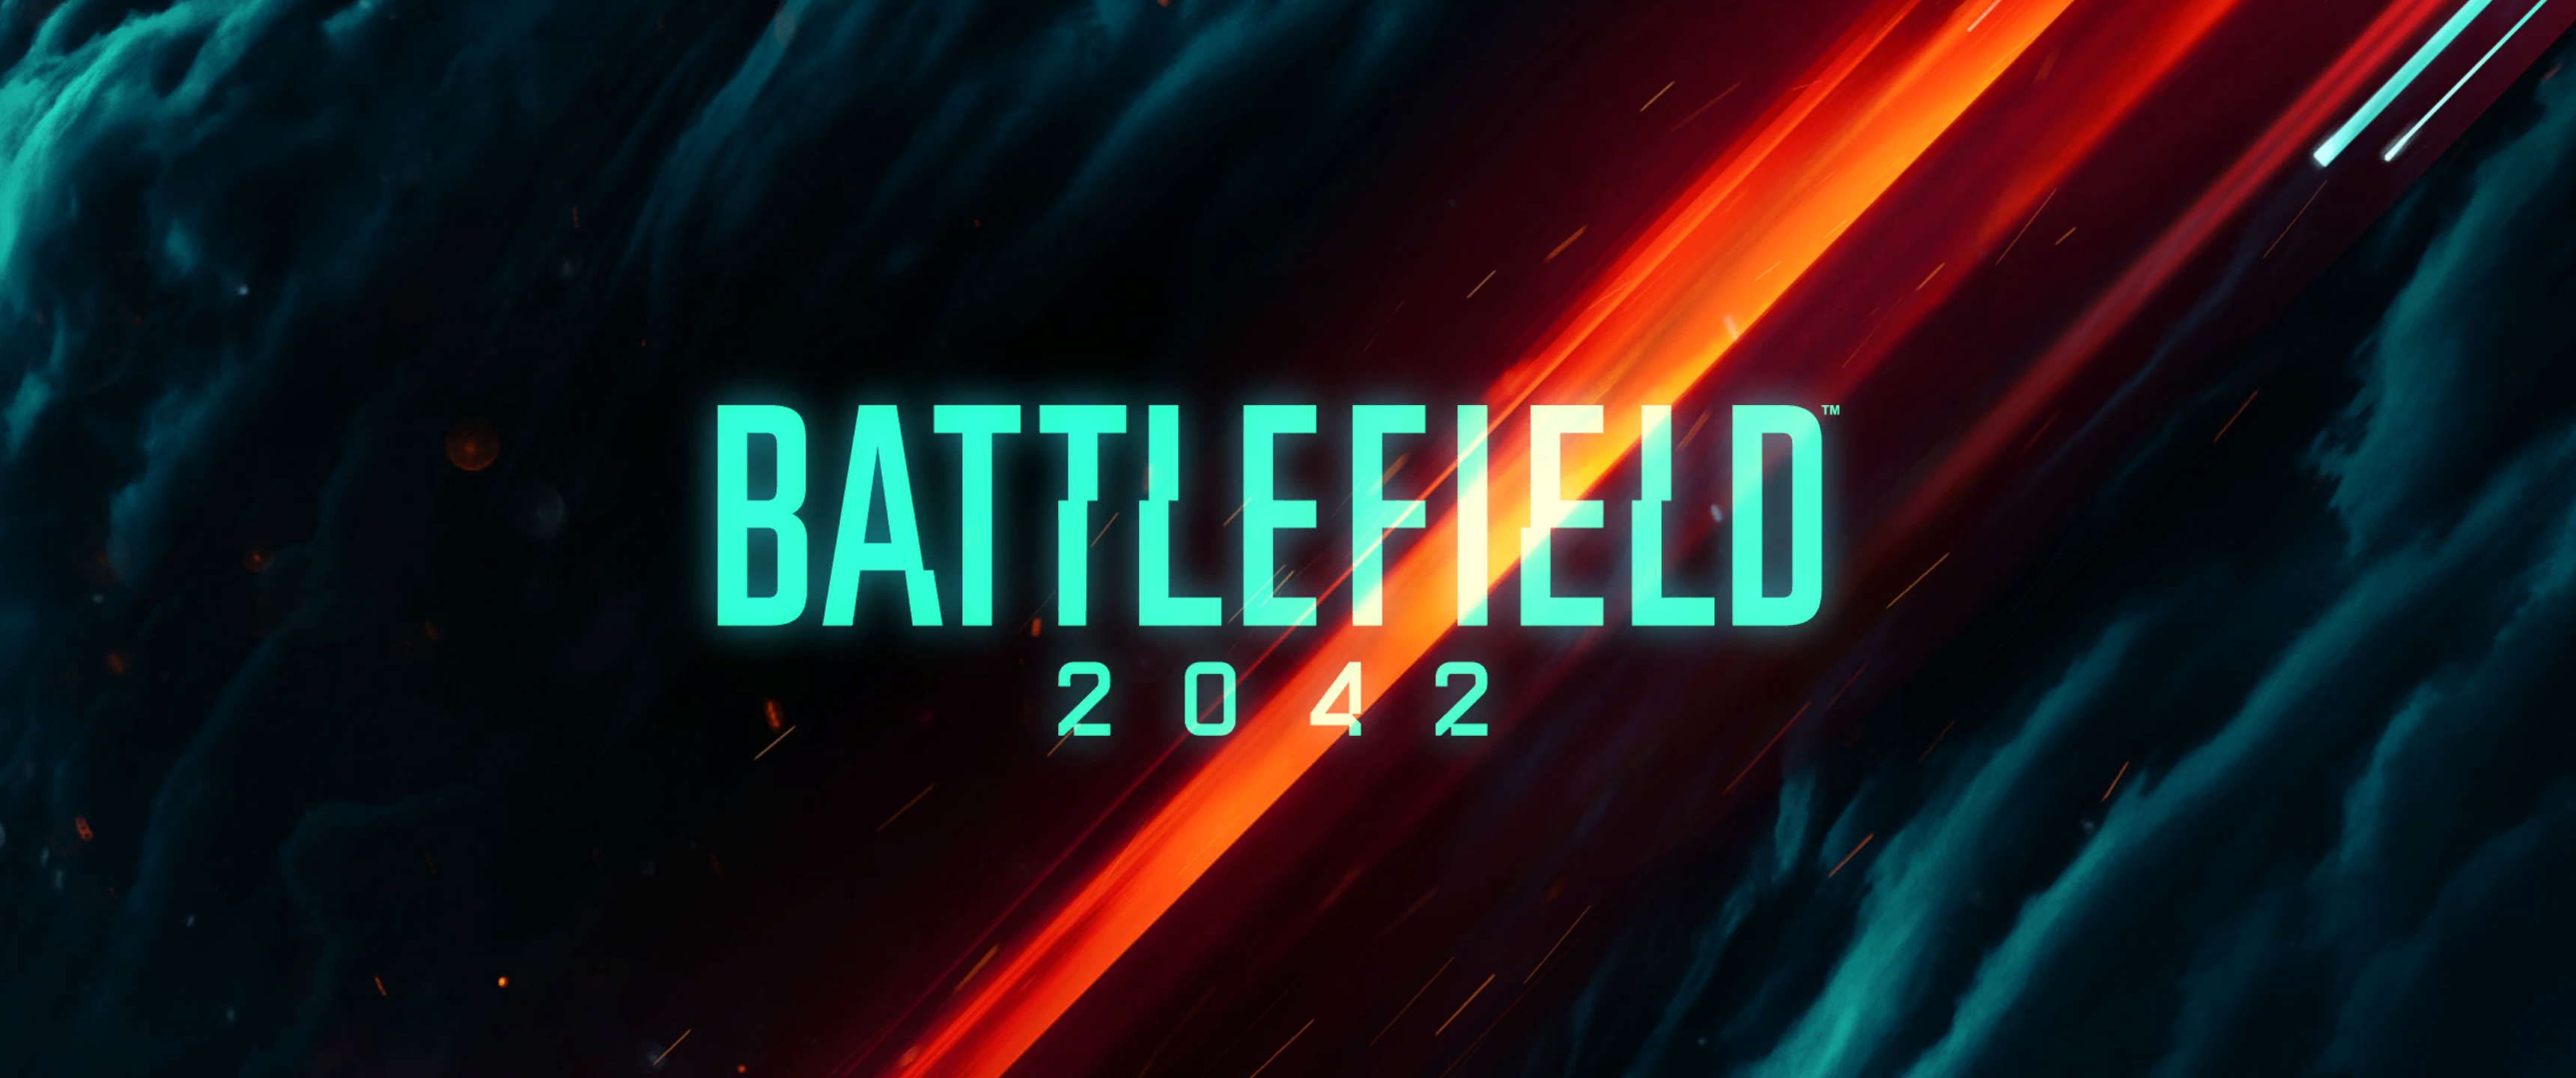 General 3440x1440 Battlefield 2042 Battlefield (game) video games EA DICE Electronic Arts